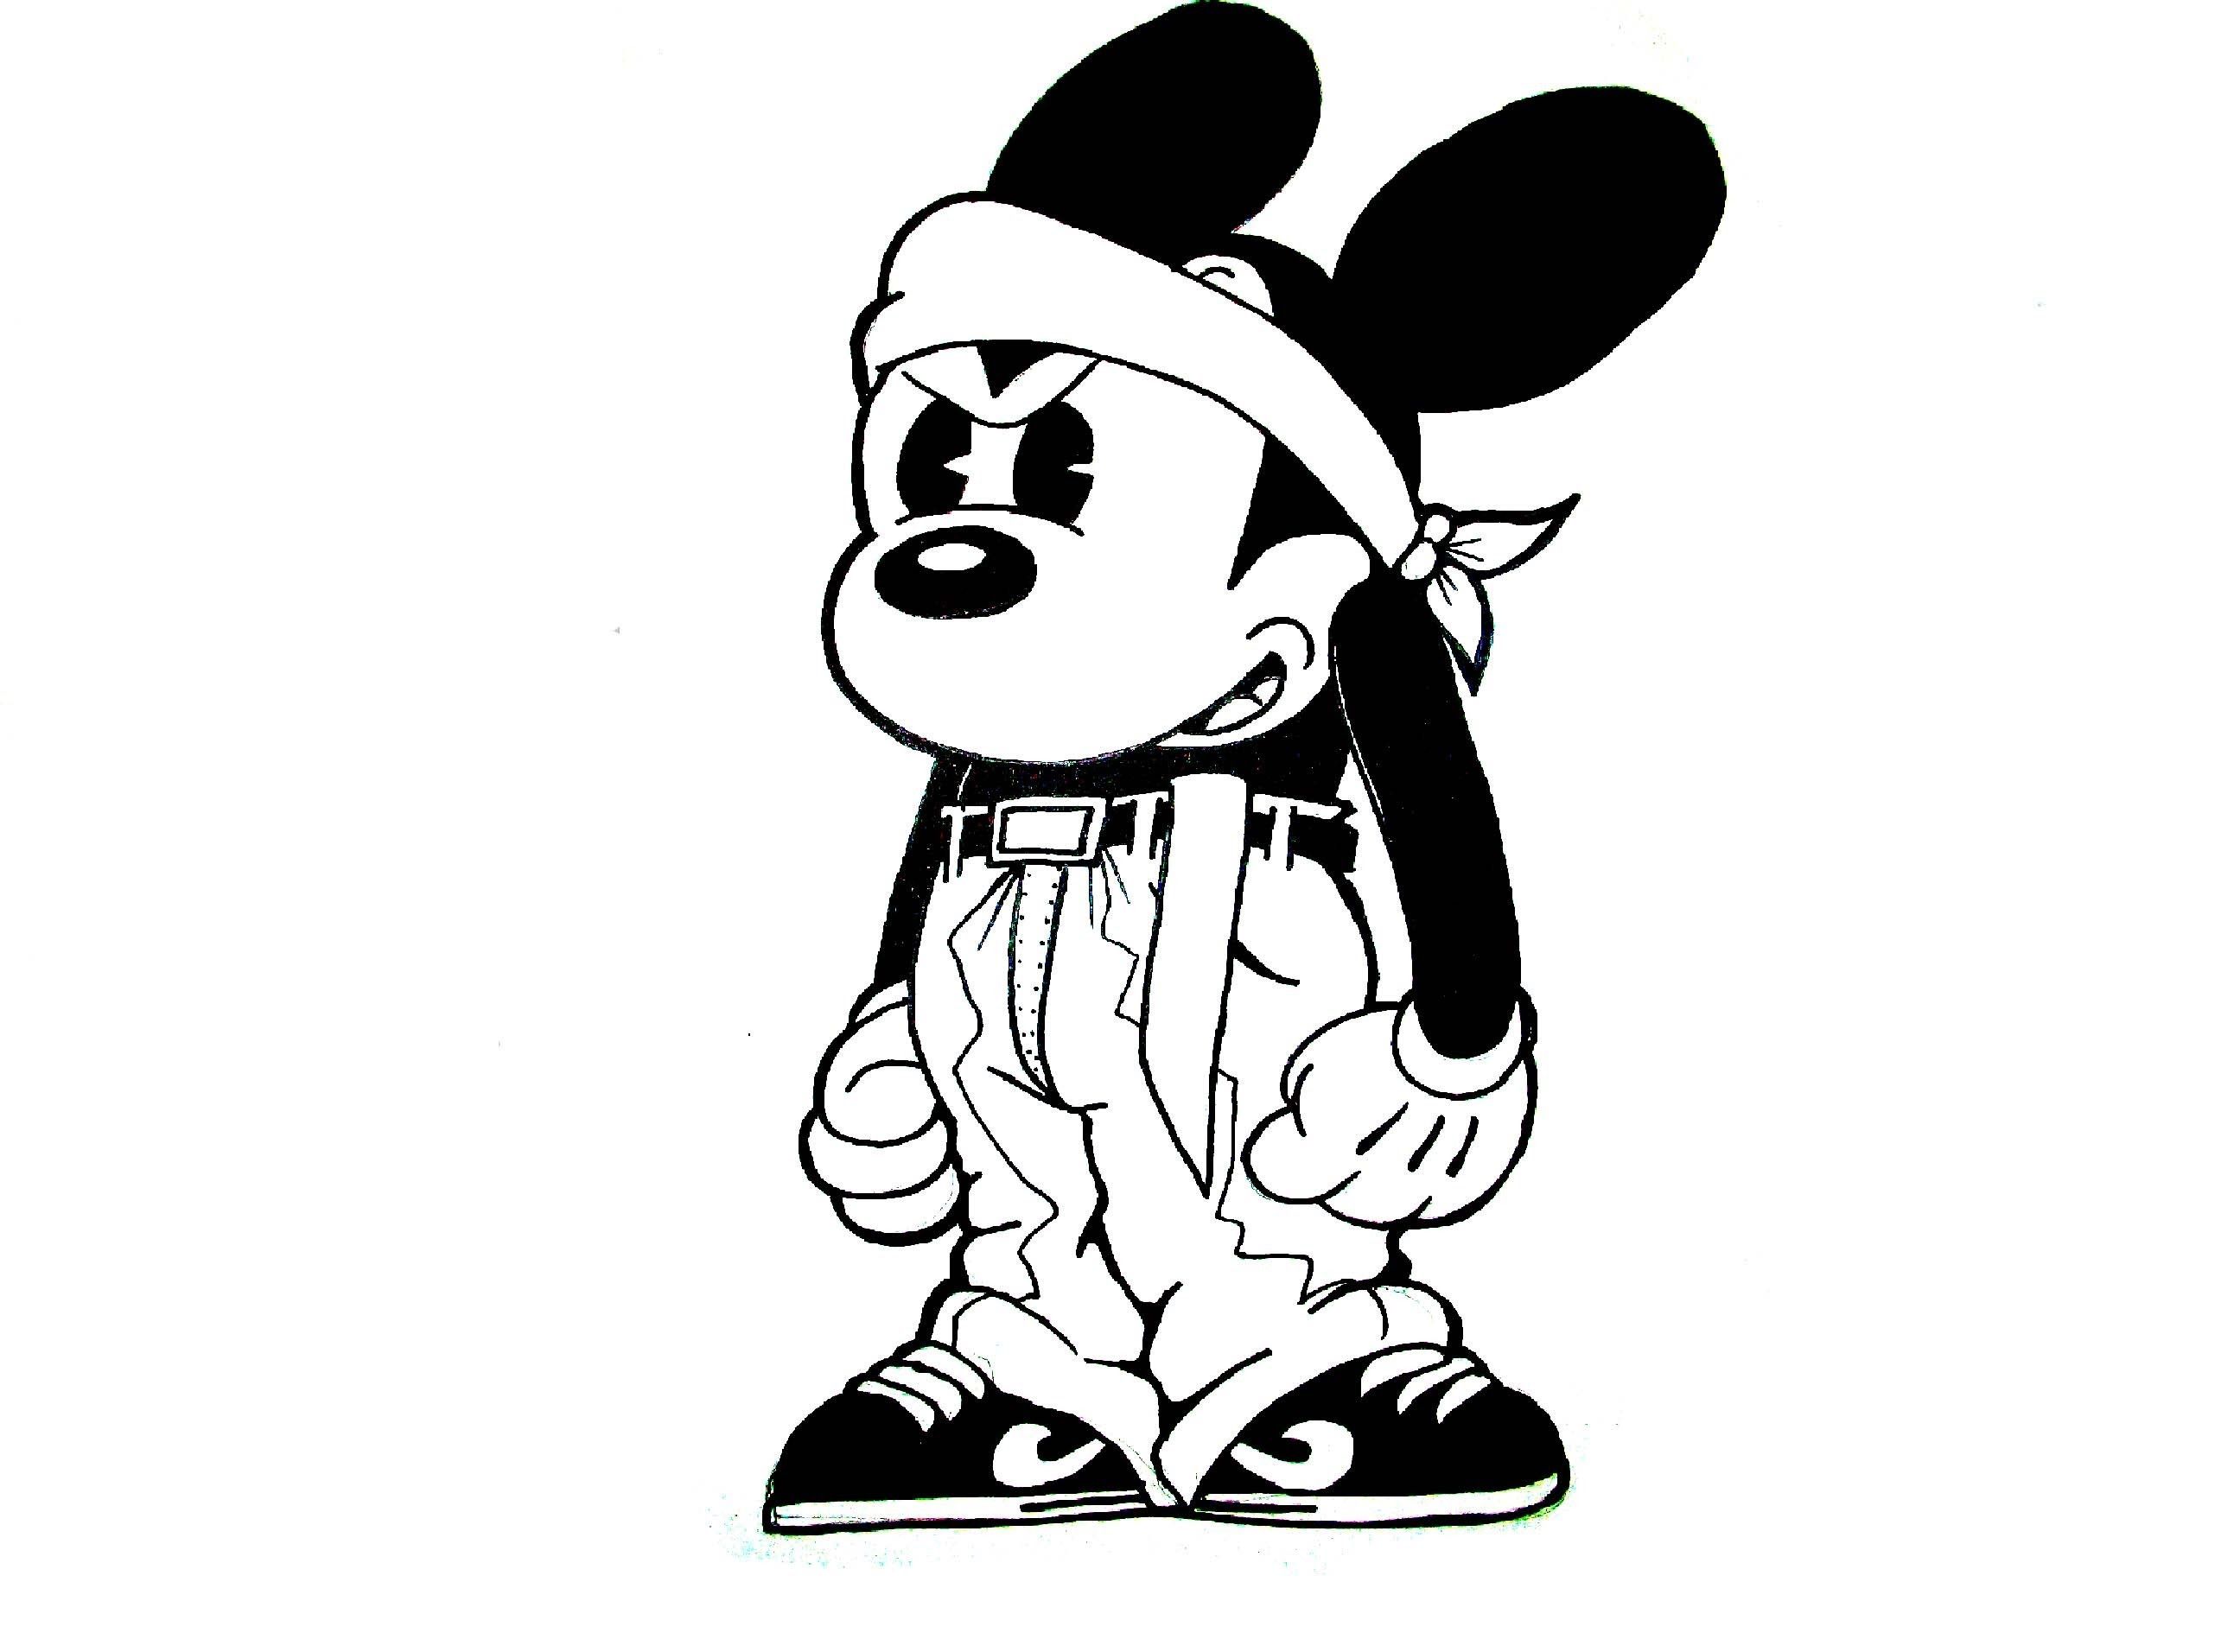 okaryot.com  Mickey mouse art, Mickey mouse wallpaper, Mickey mouse  drawings